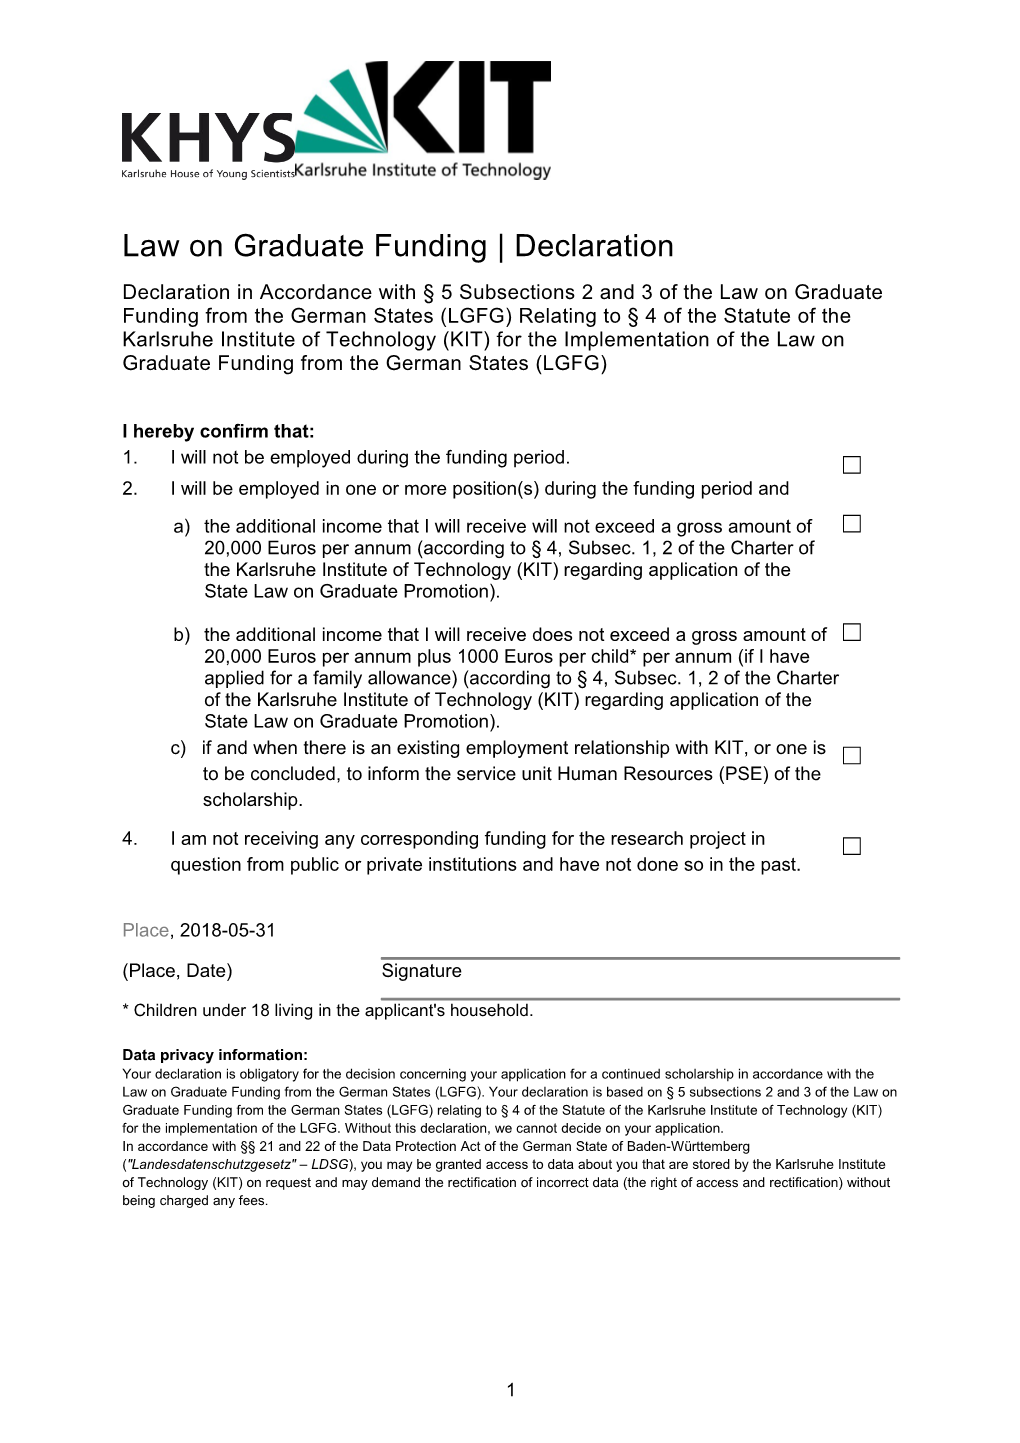 Law on Graduate Funding Declaration